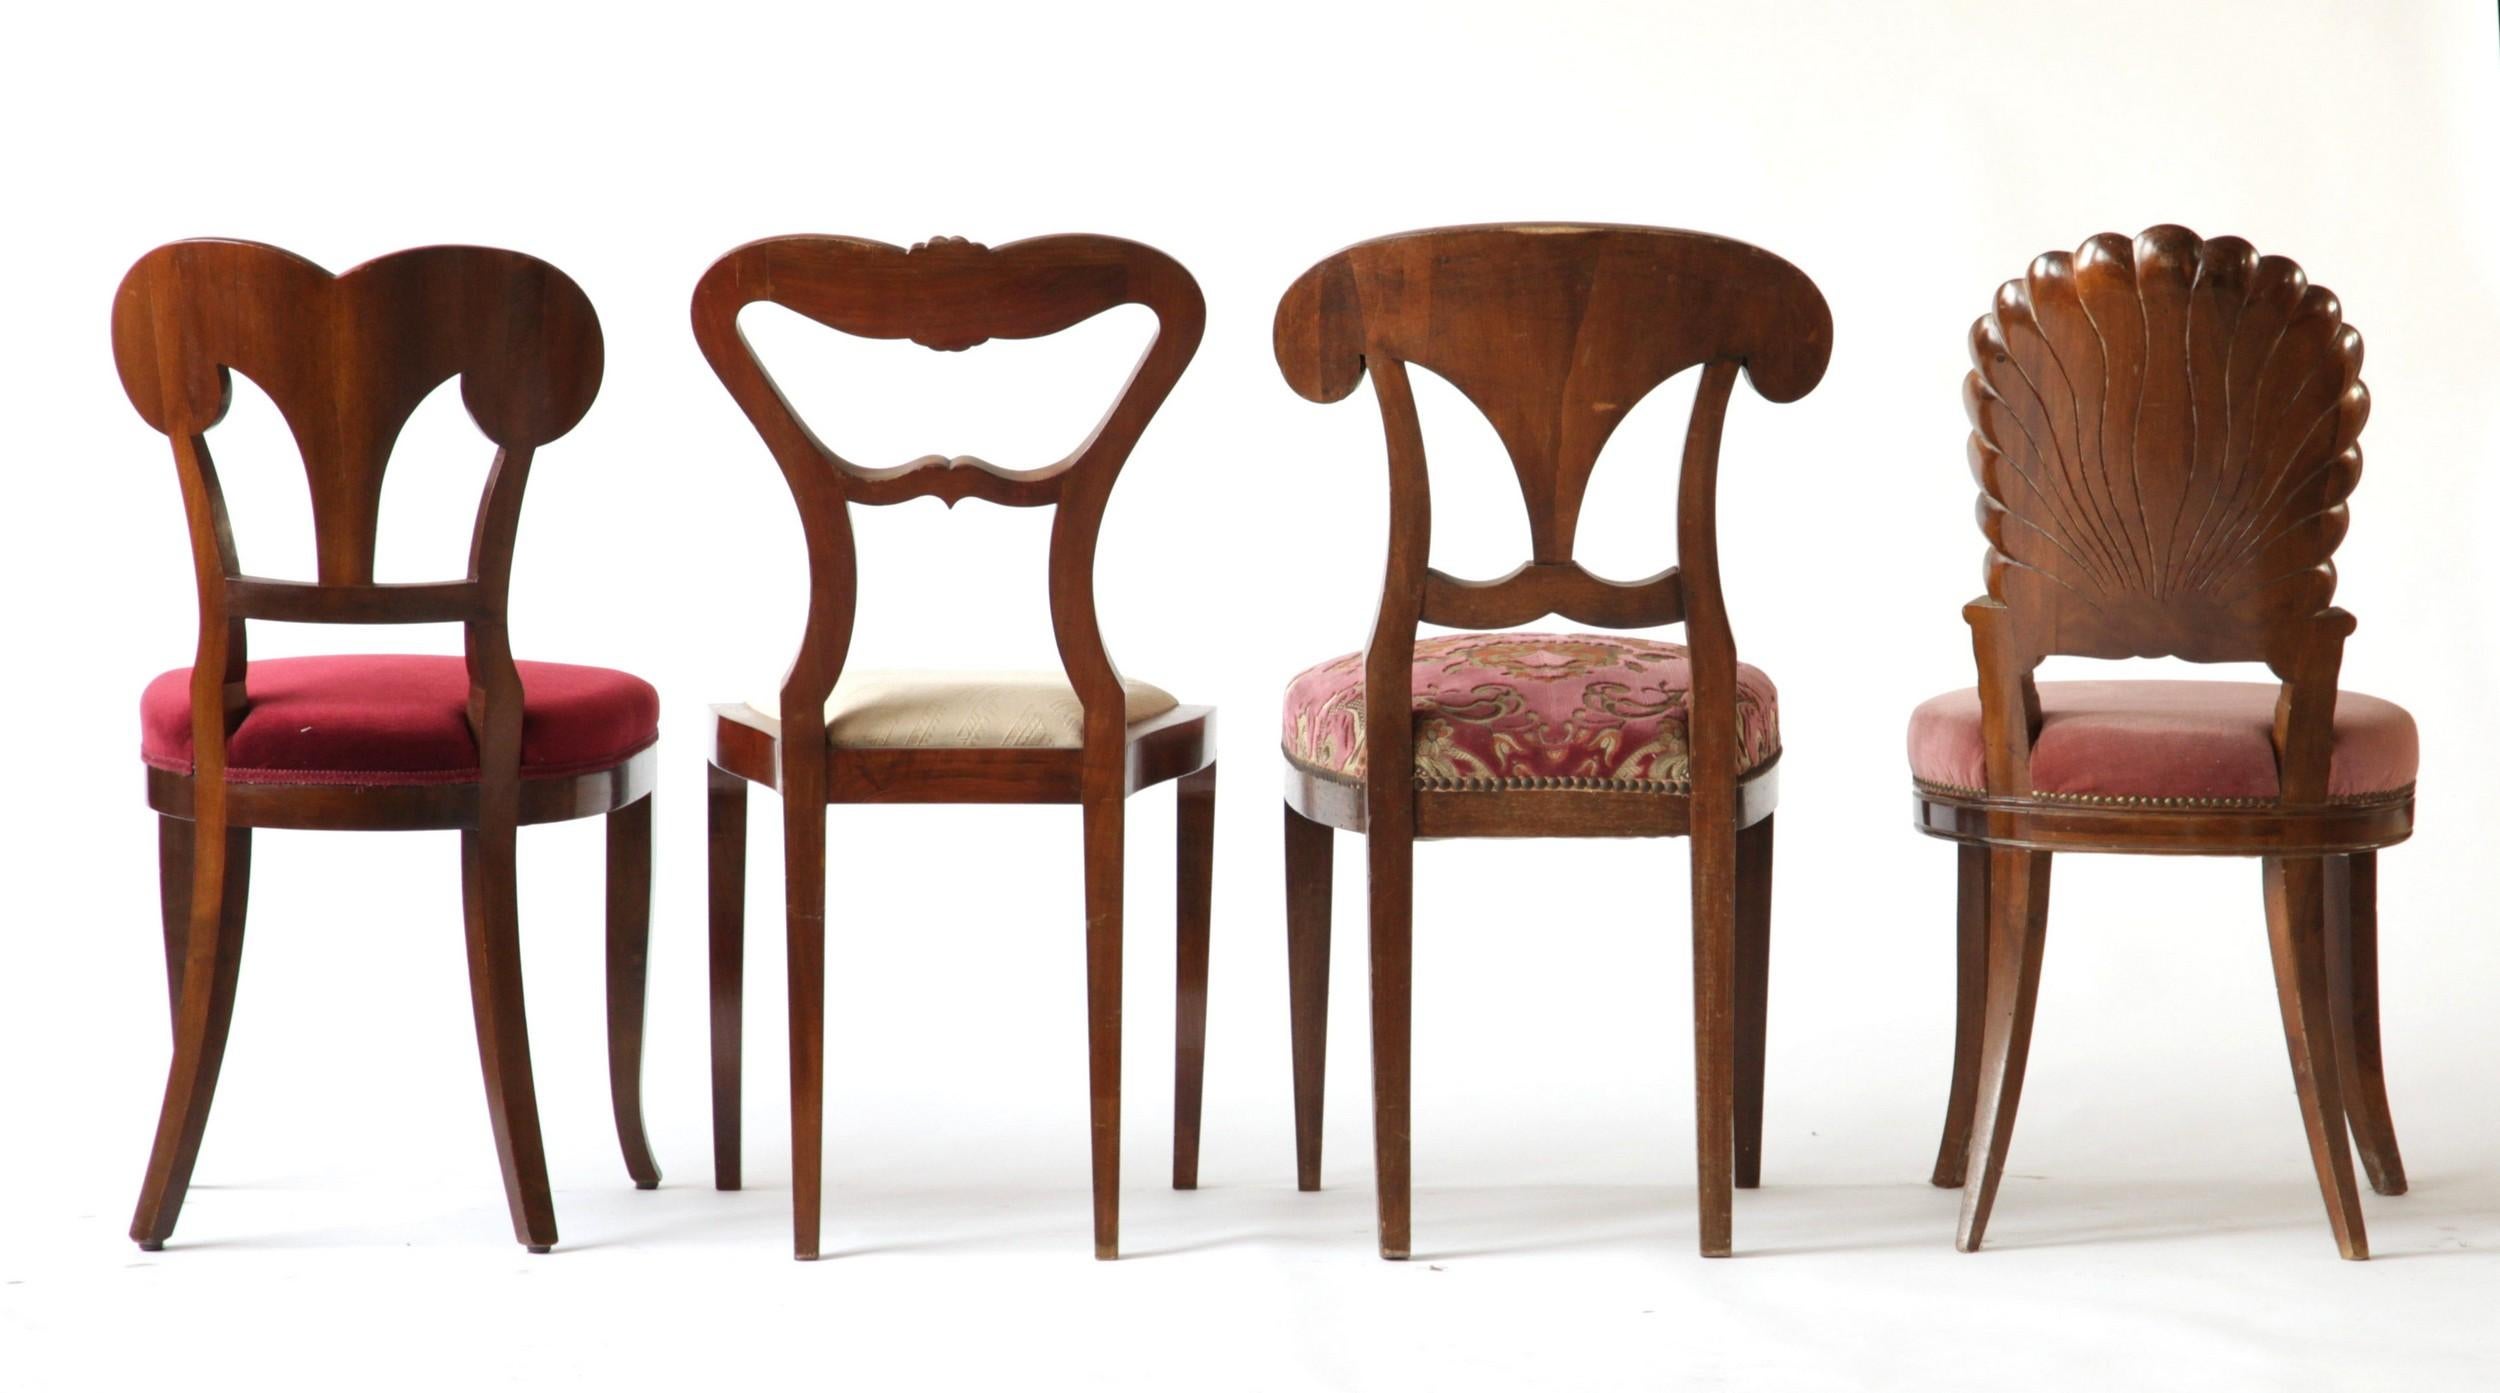 biedermeier chairs for sale